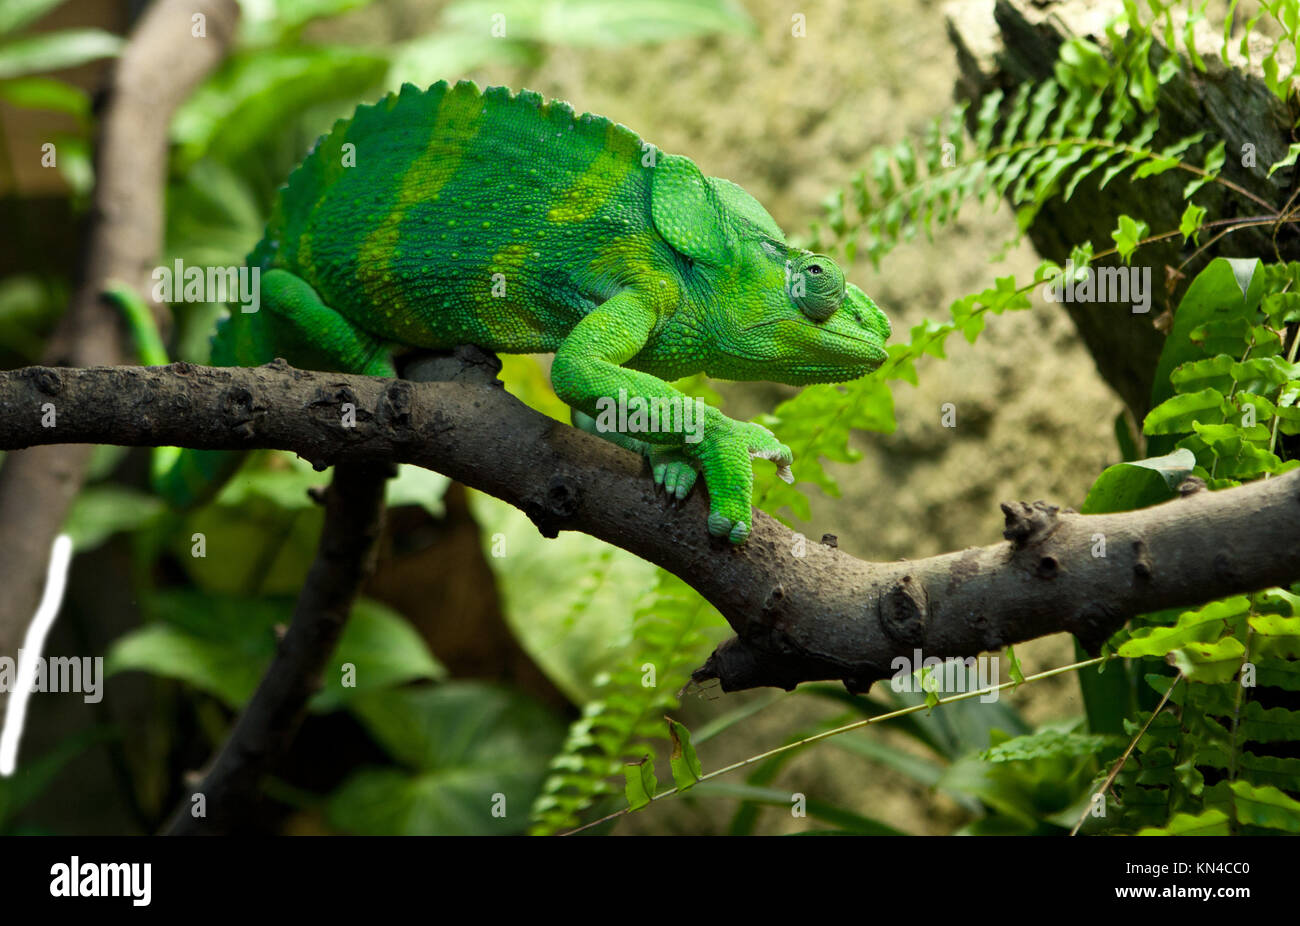 Giant Chameleon, Chamaeleo melleri with strong green colour over branch. Stock Photo